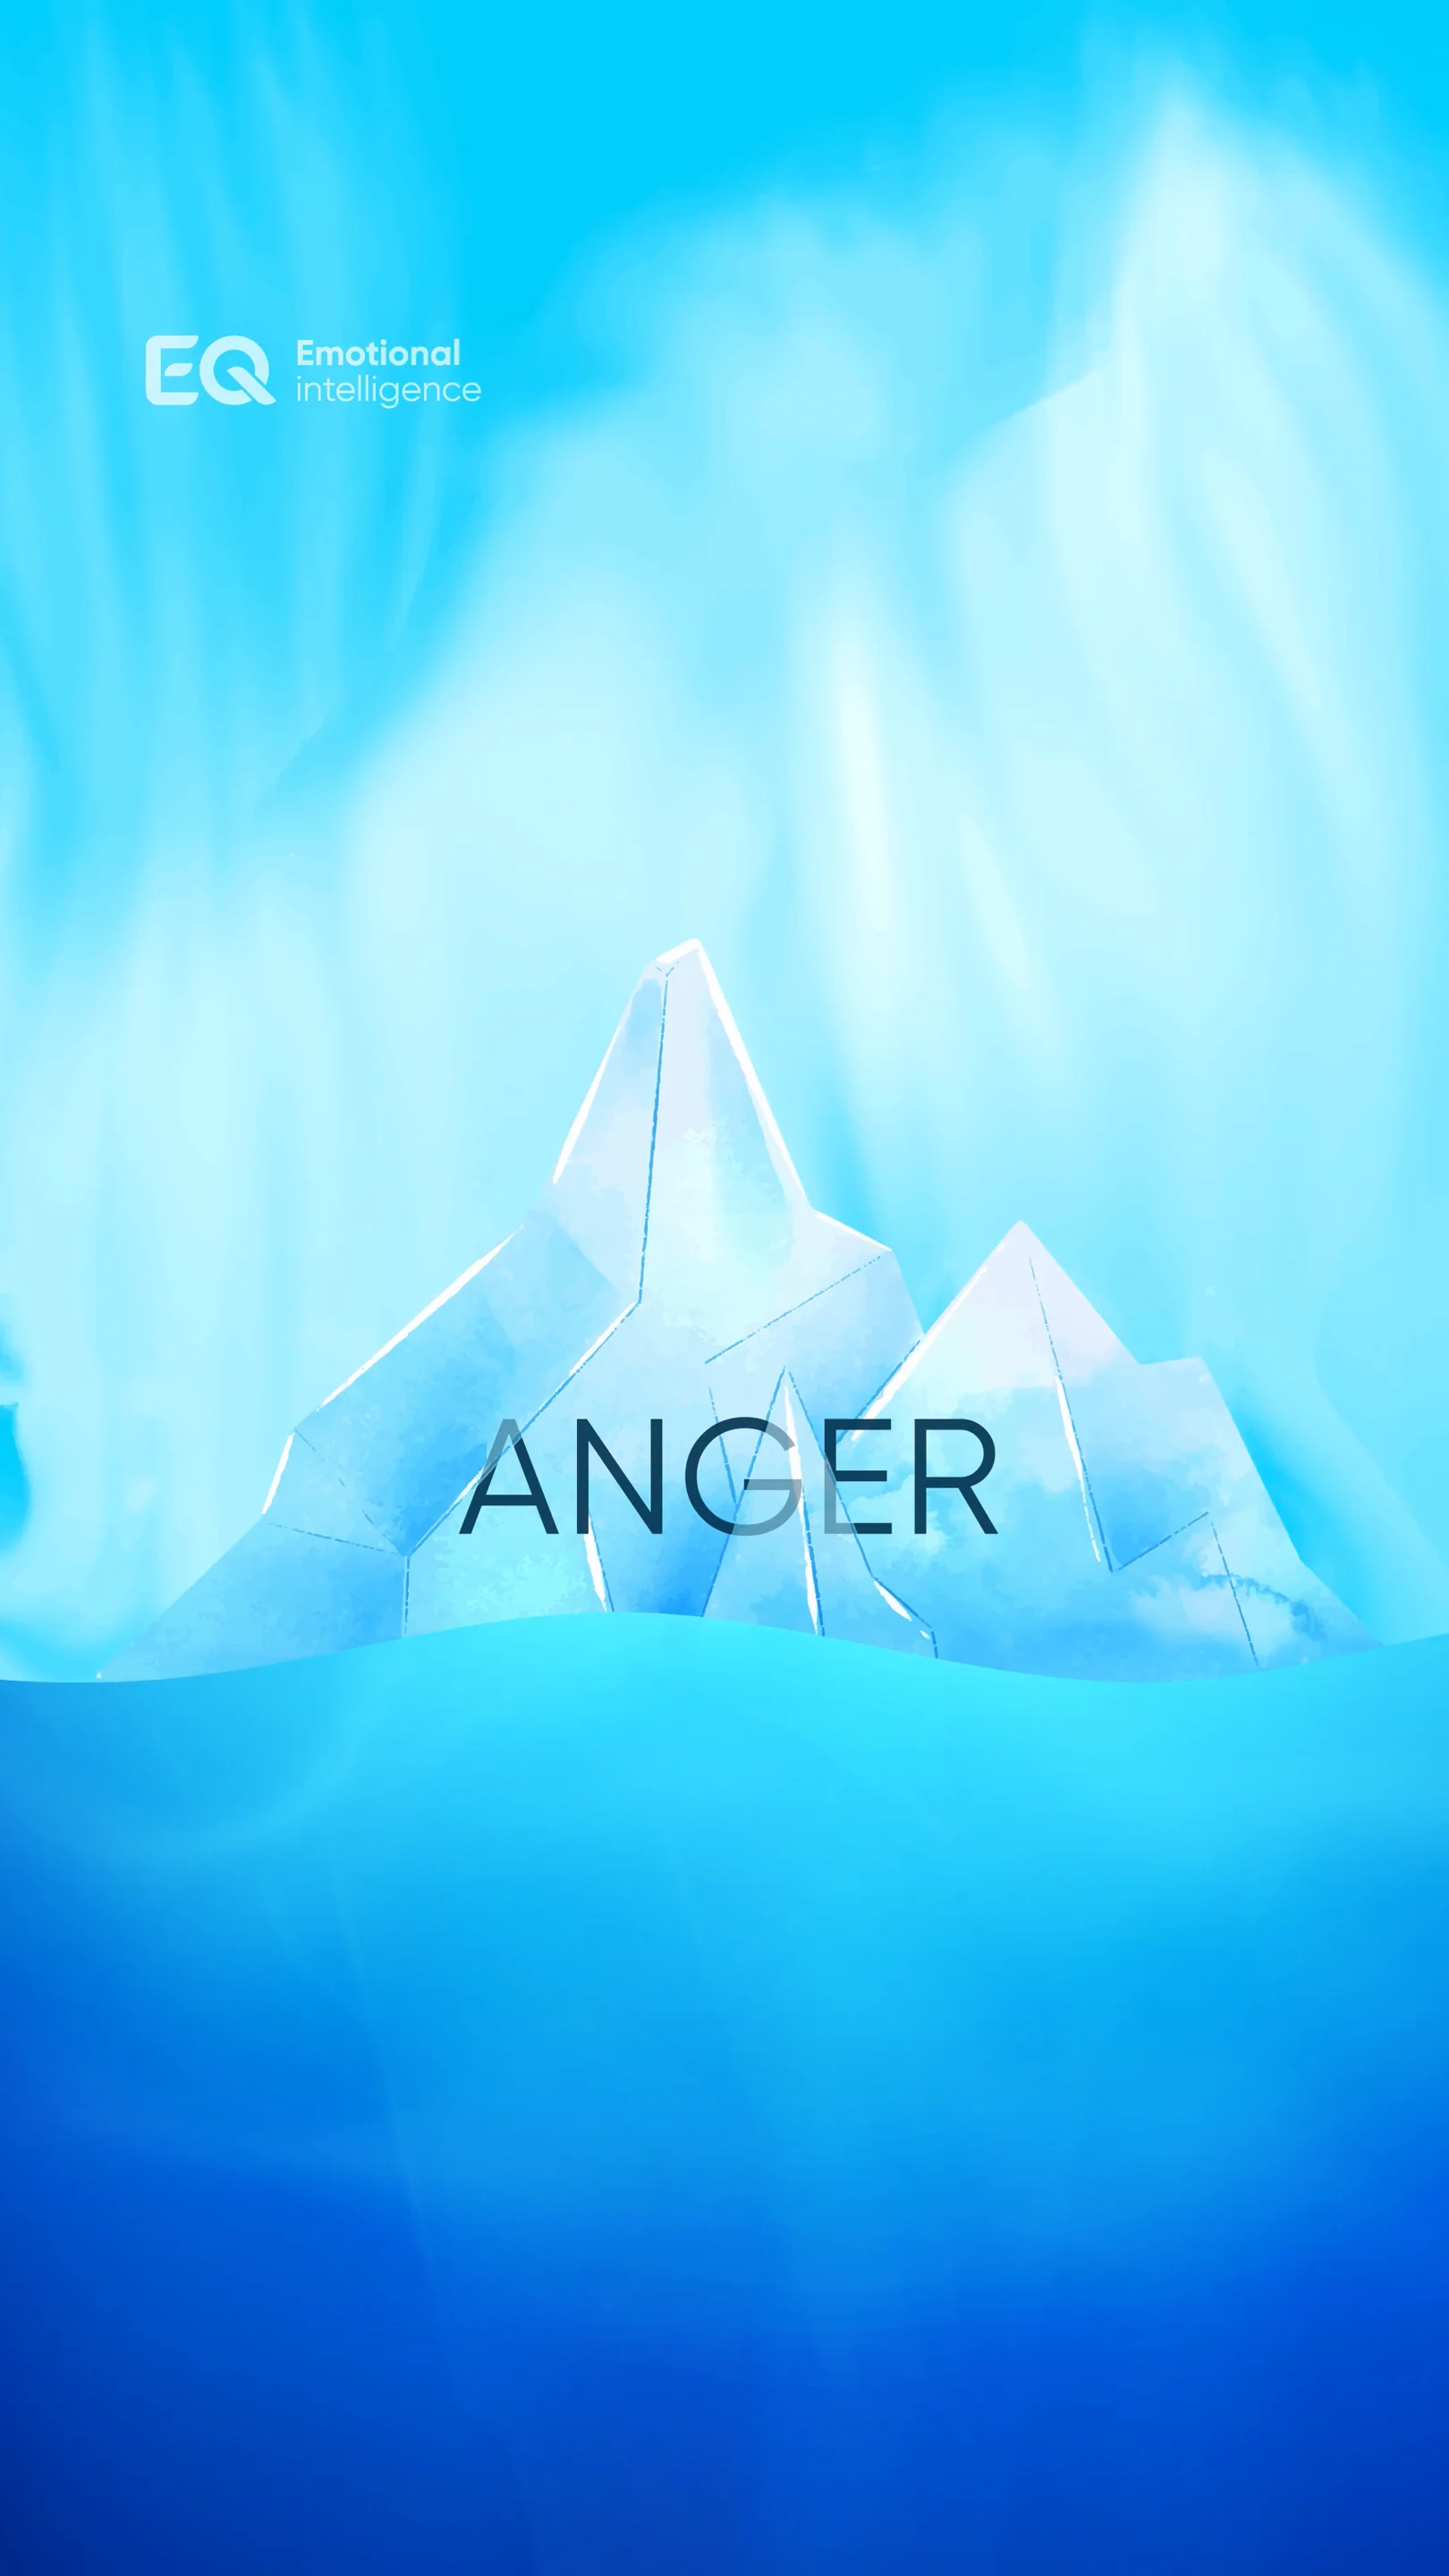 Anger iceberg on Vimeo